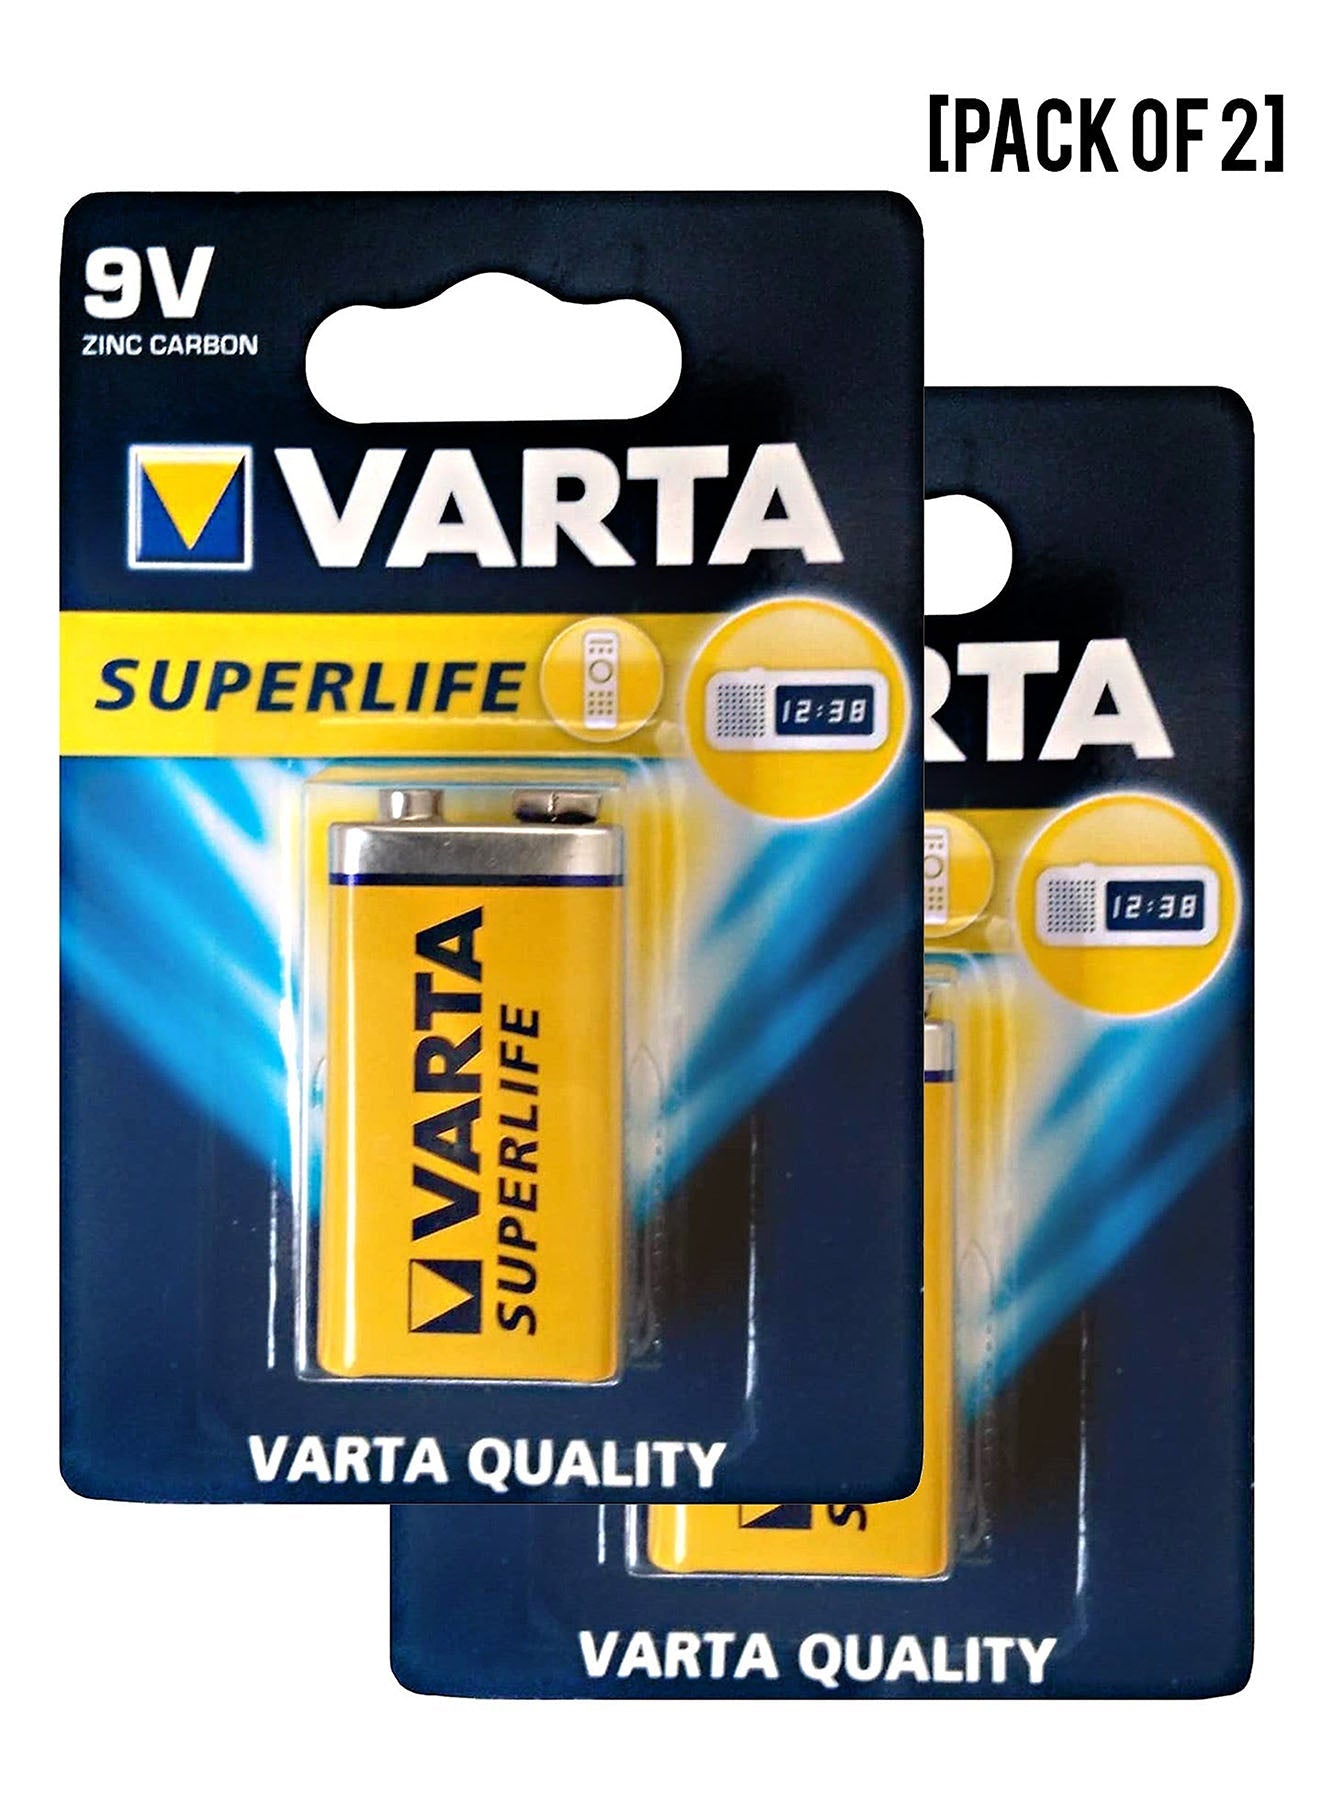 Varta Superlife 9 V Battery Value Pack of 2 